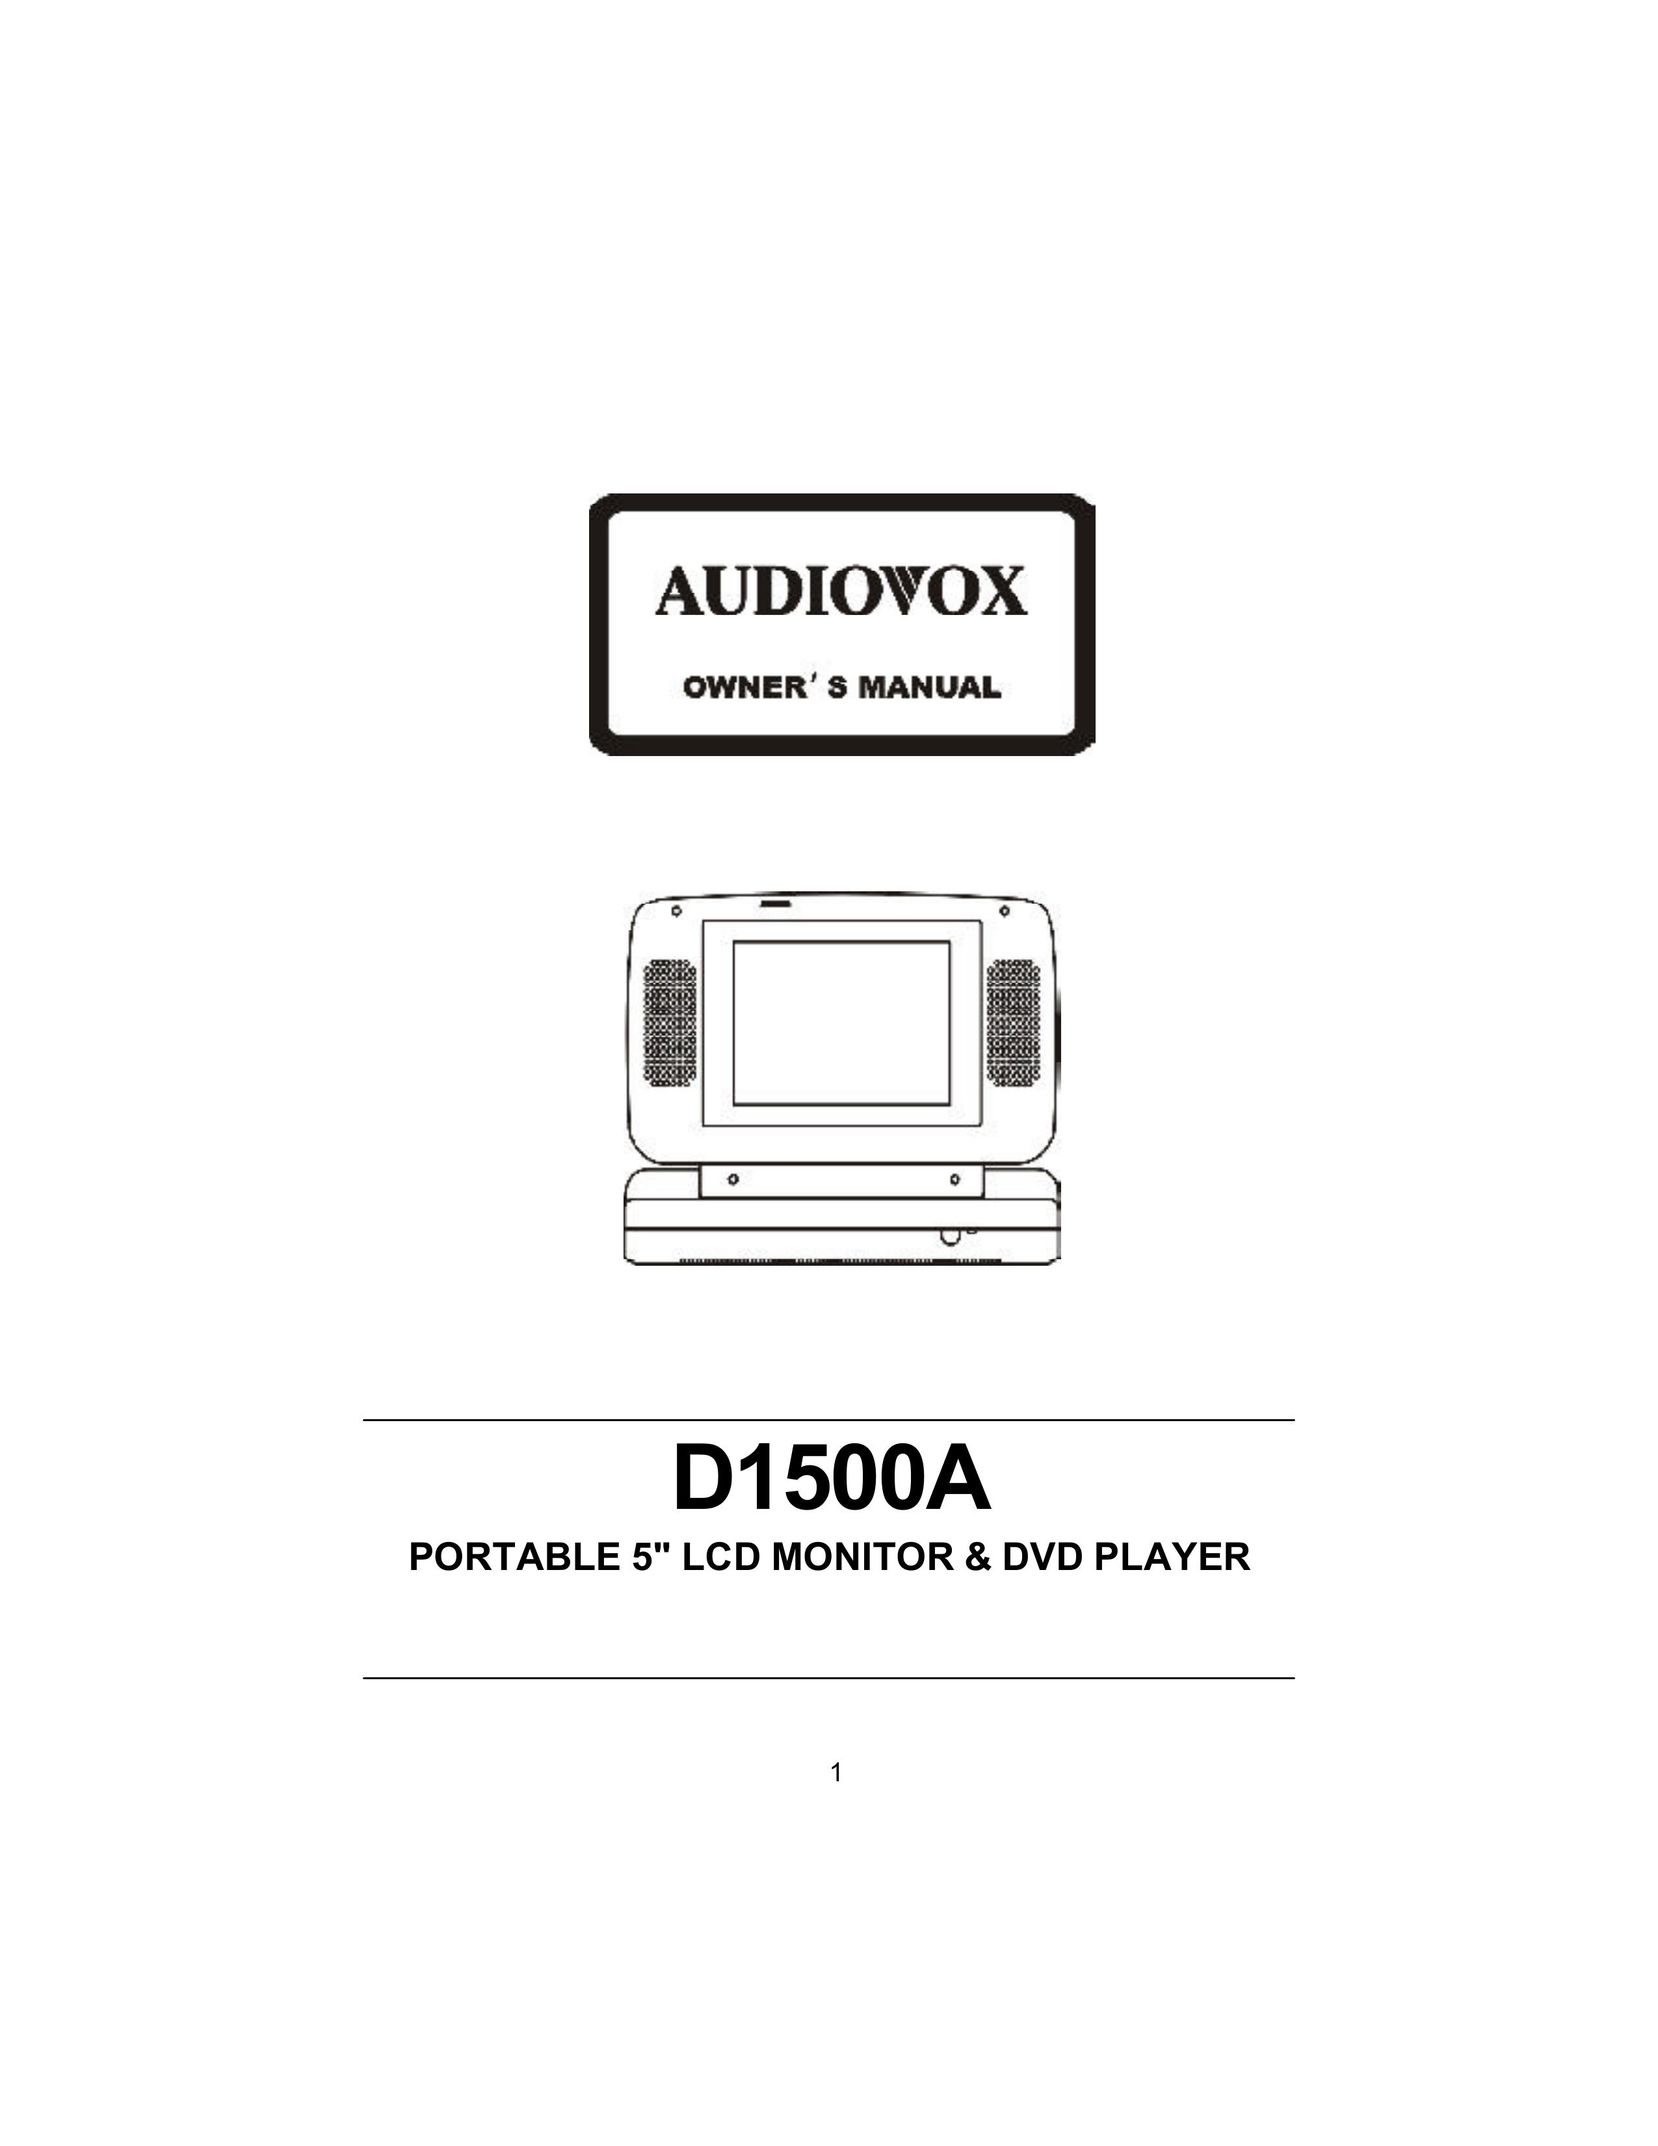 Audiovox D1500A Portable DVD Player User Manual